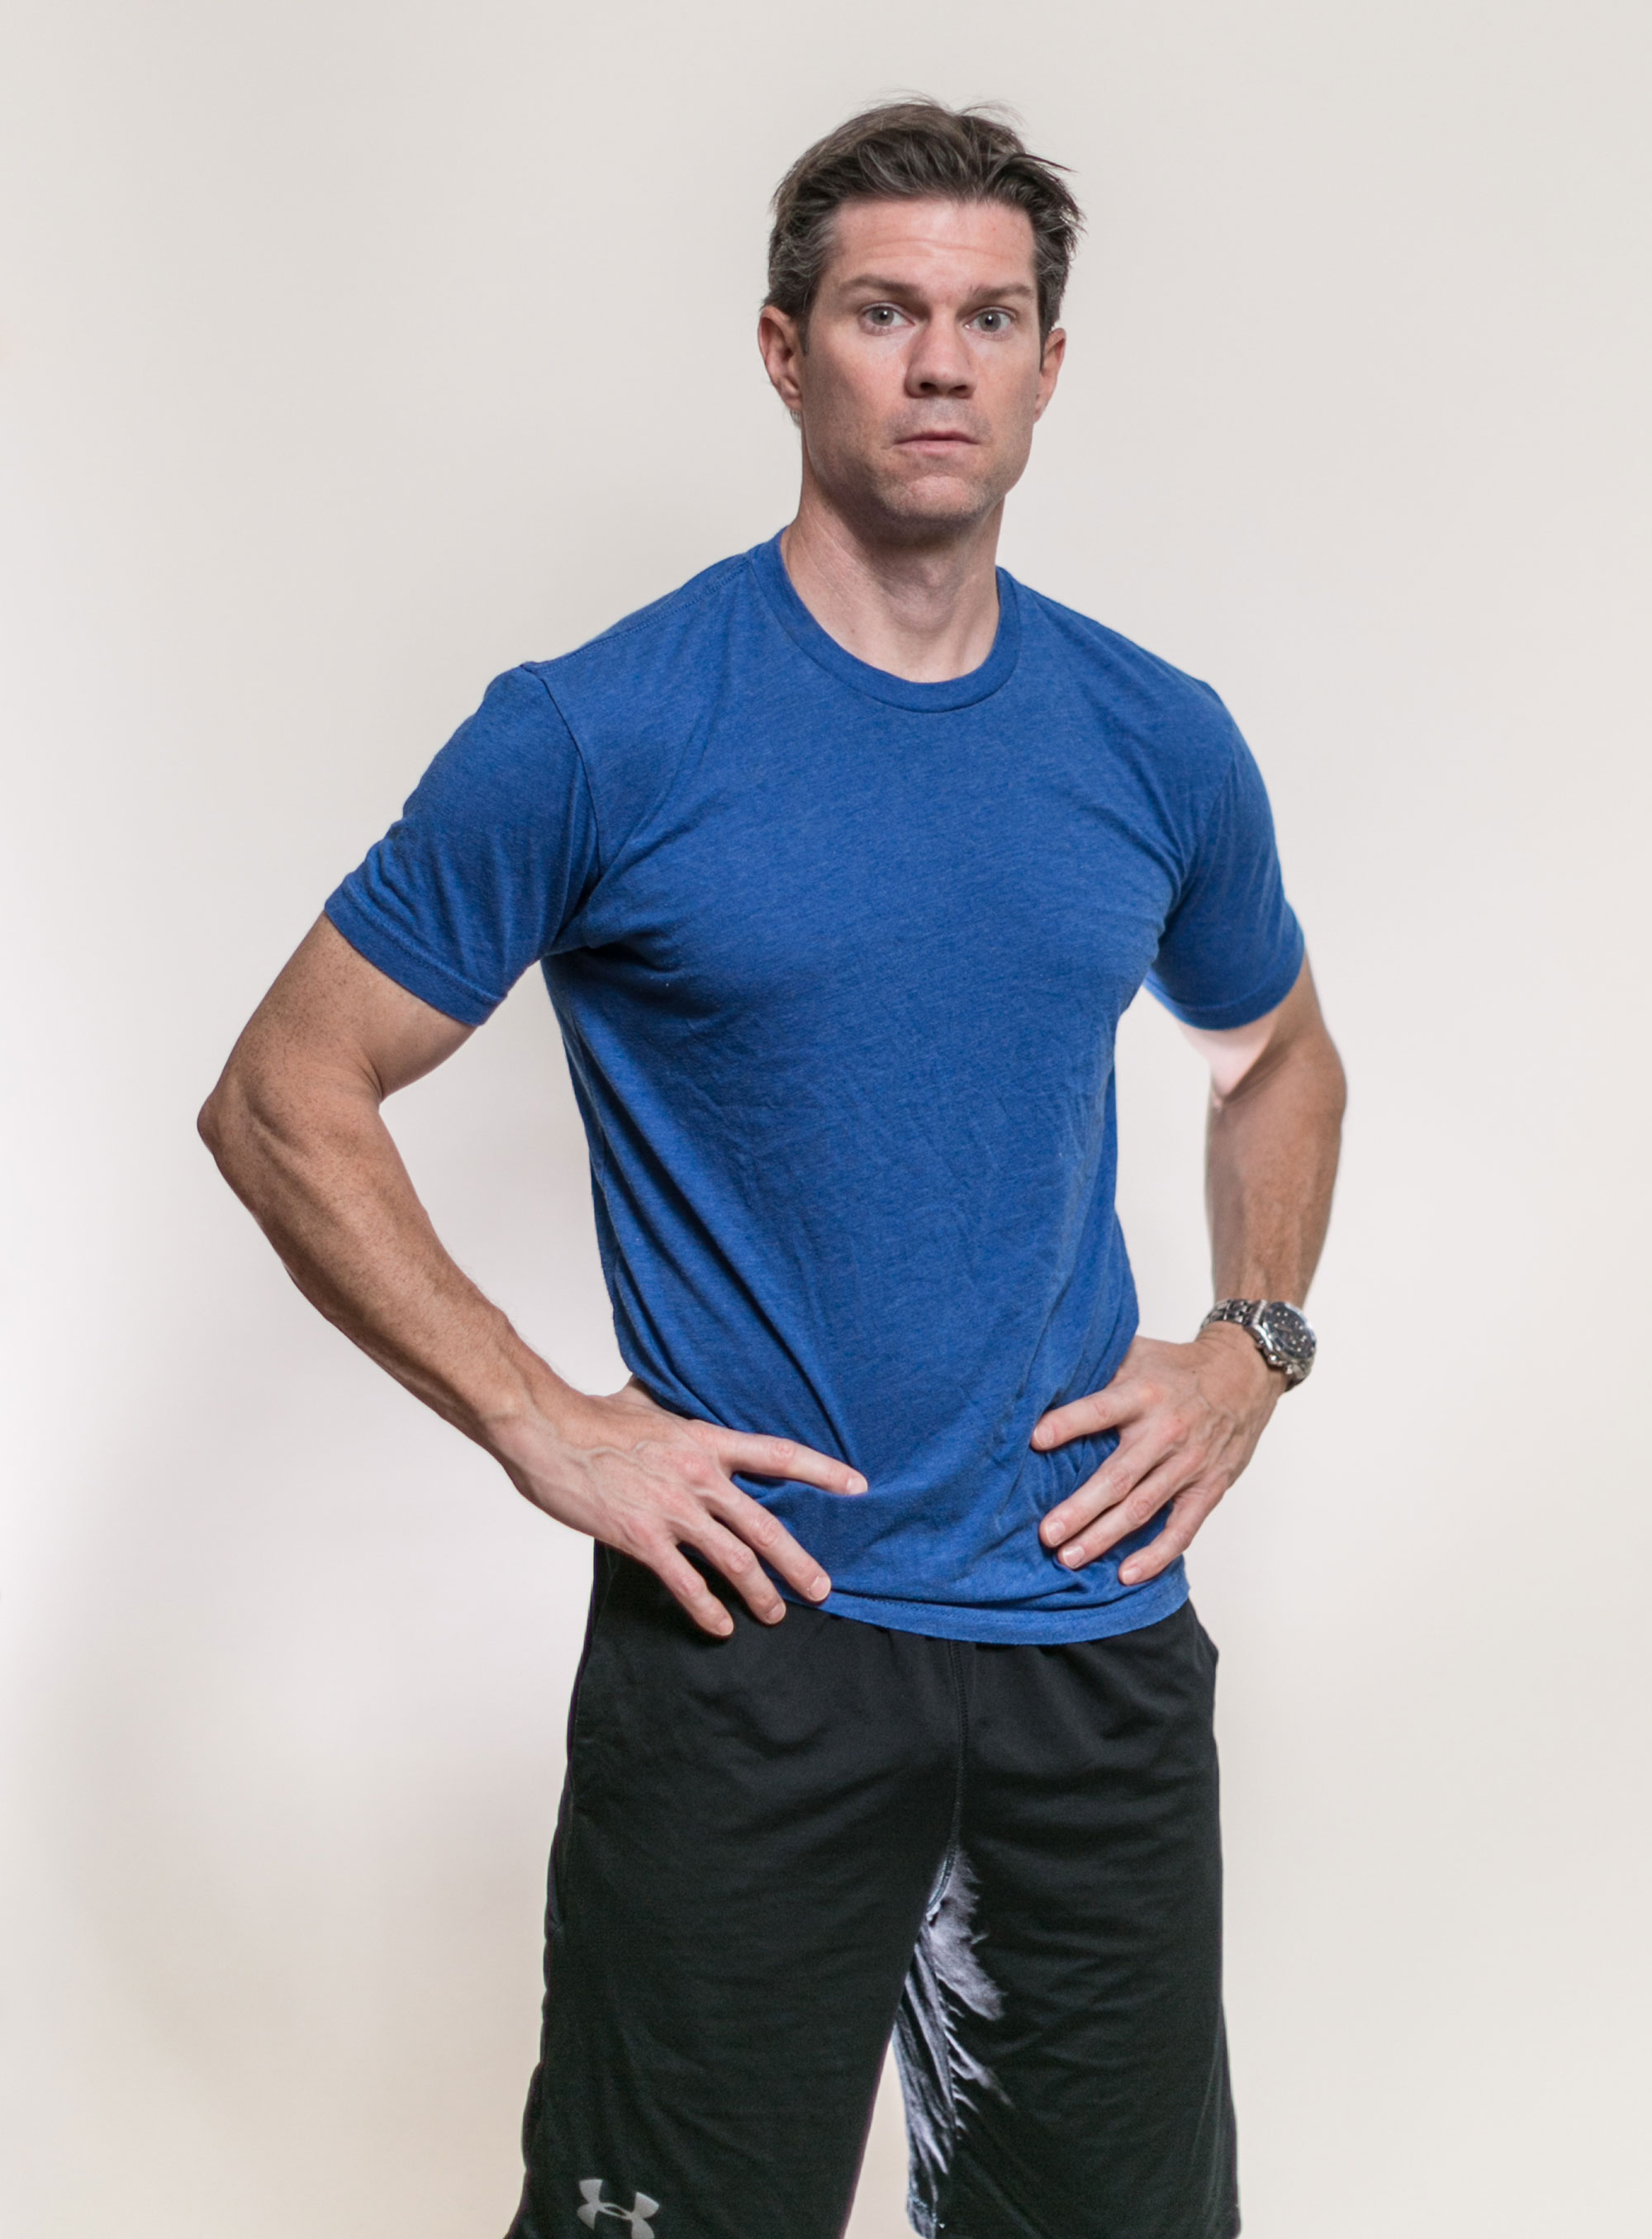 Craig Thomas, Executive Fitness Training